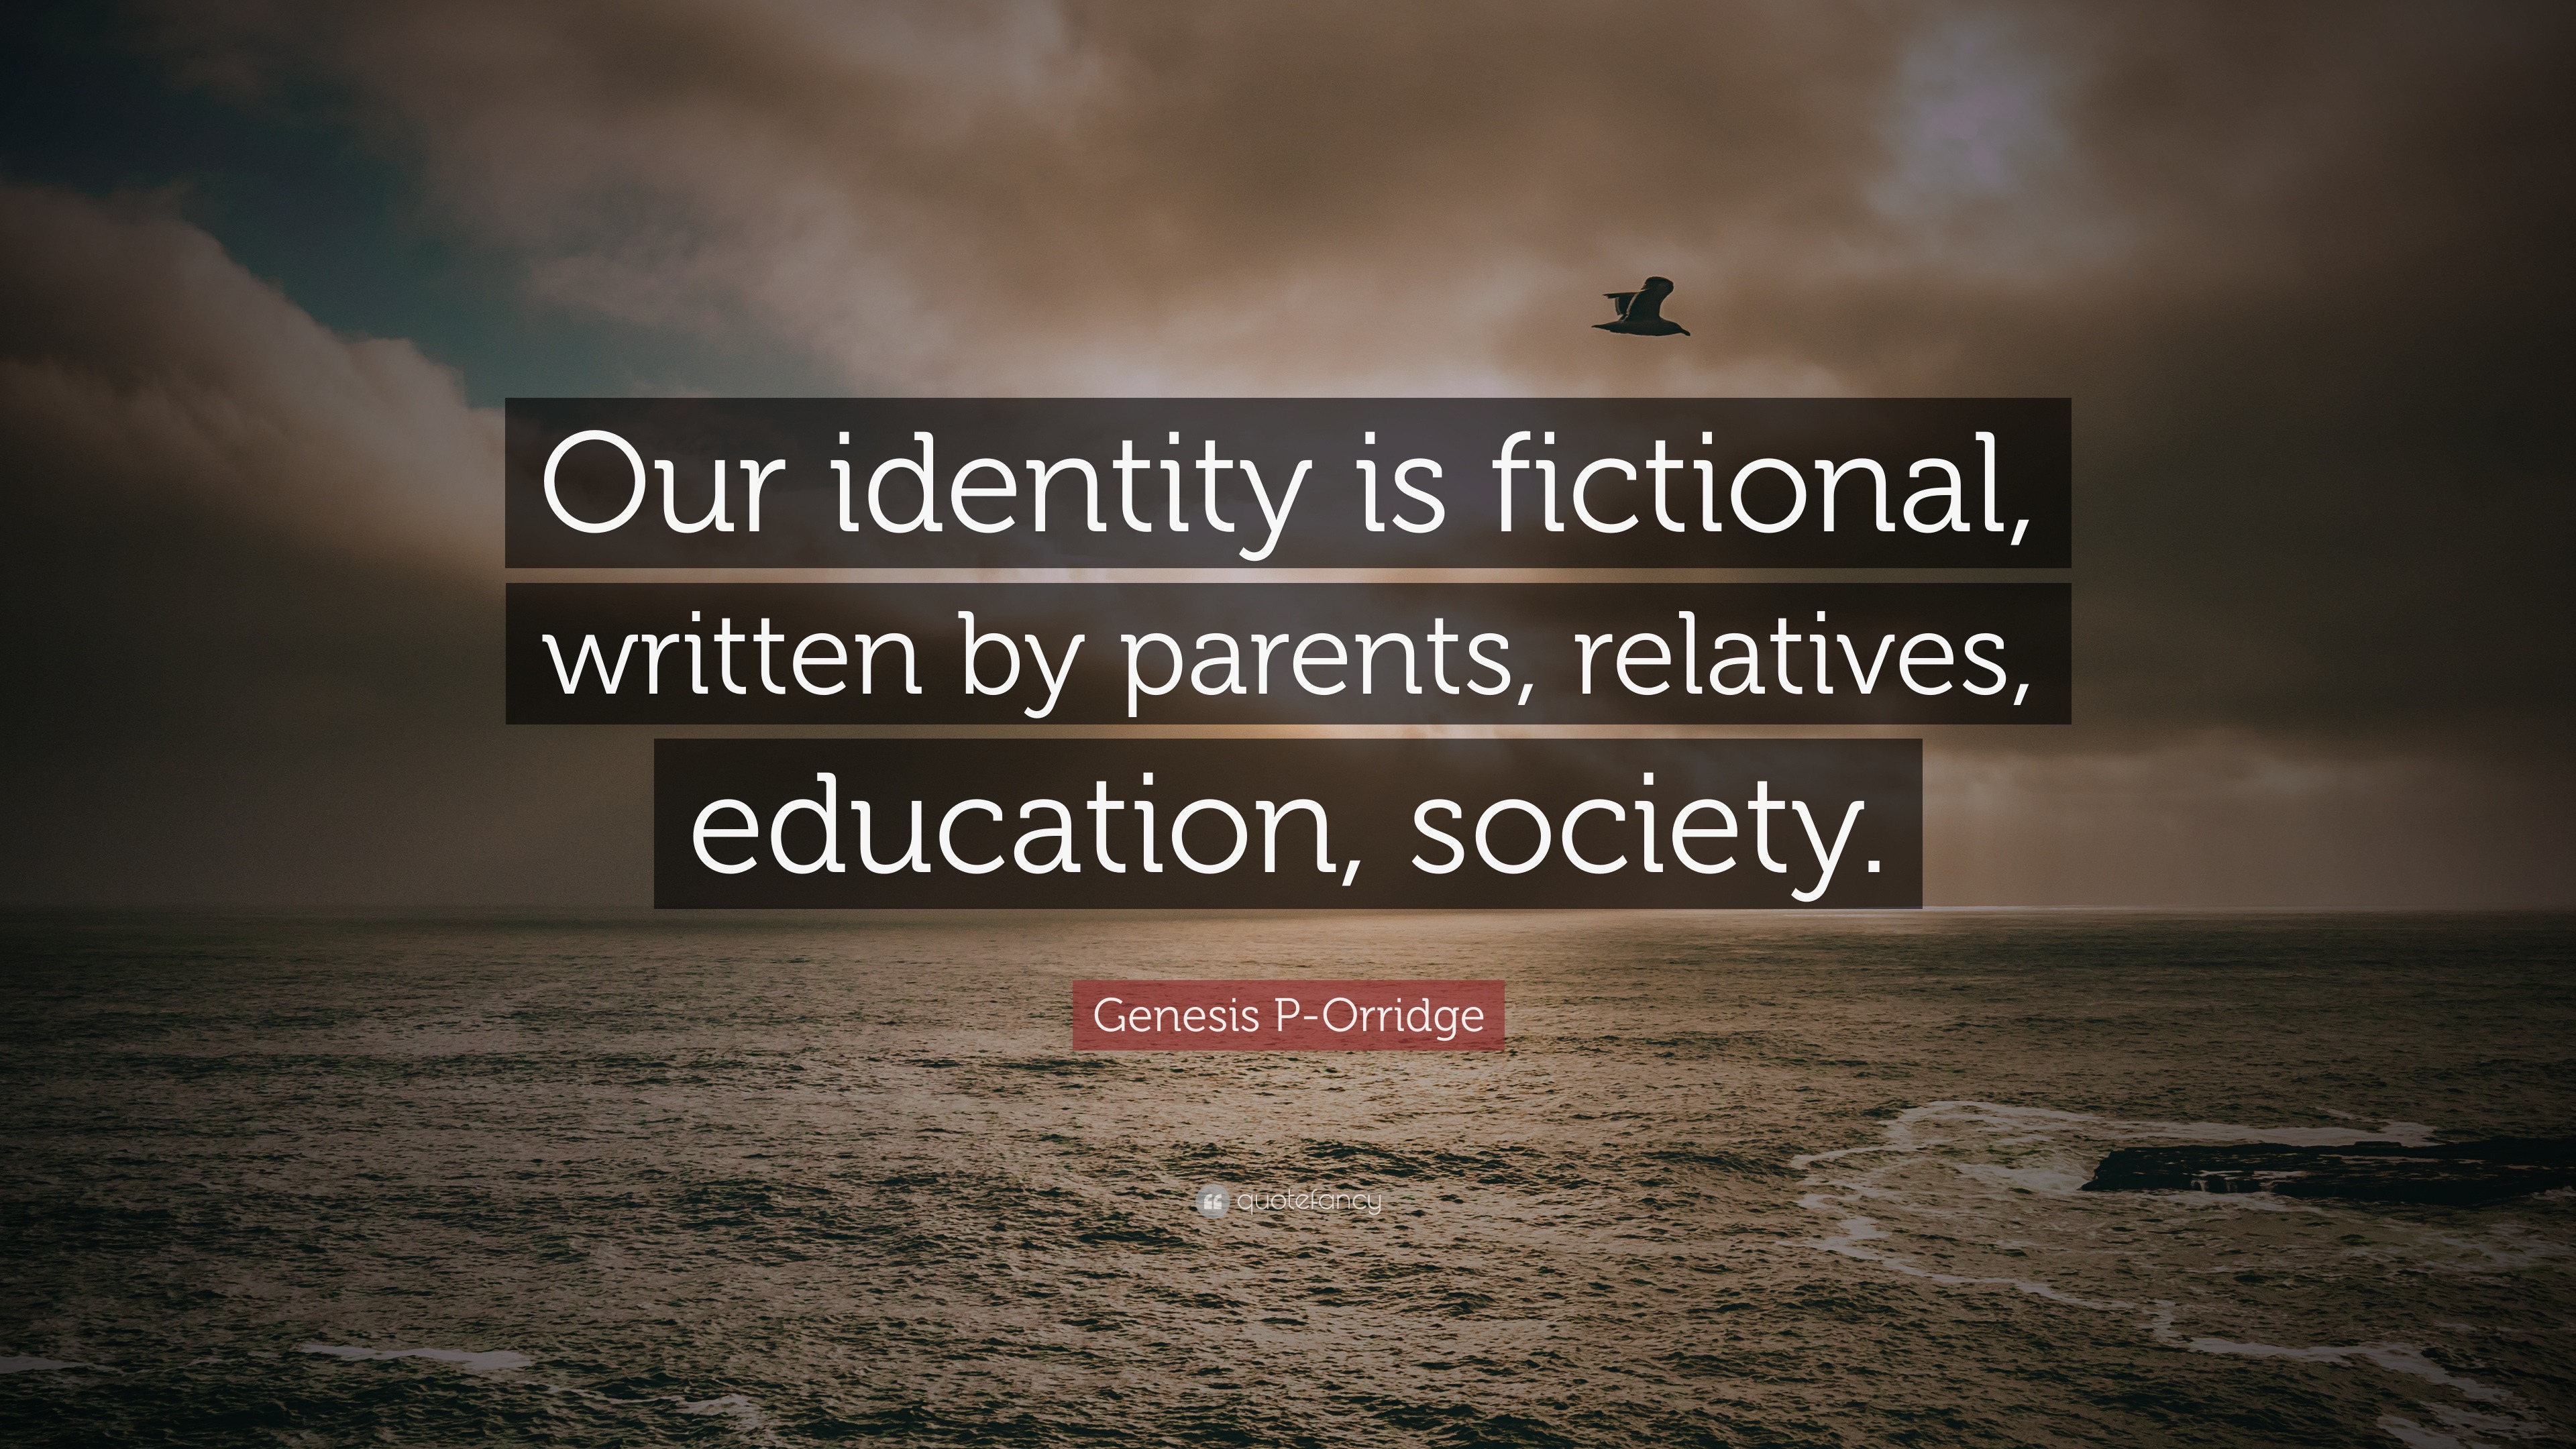 Genesis P-Orridge Quote: “Our identity is fictional, written by parents